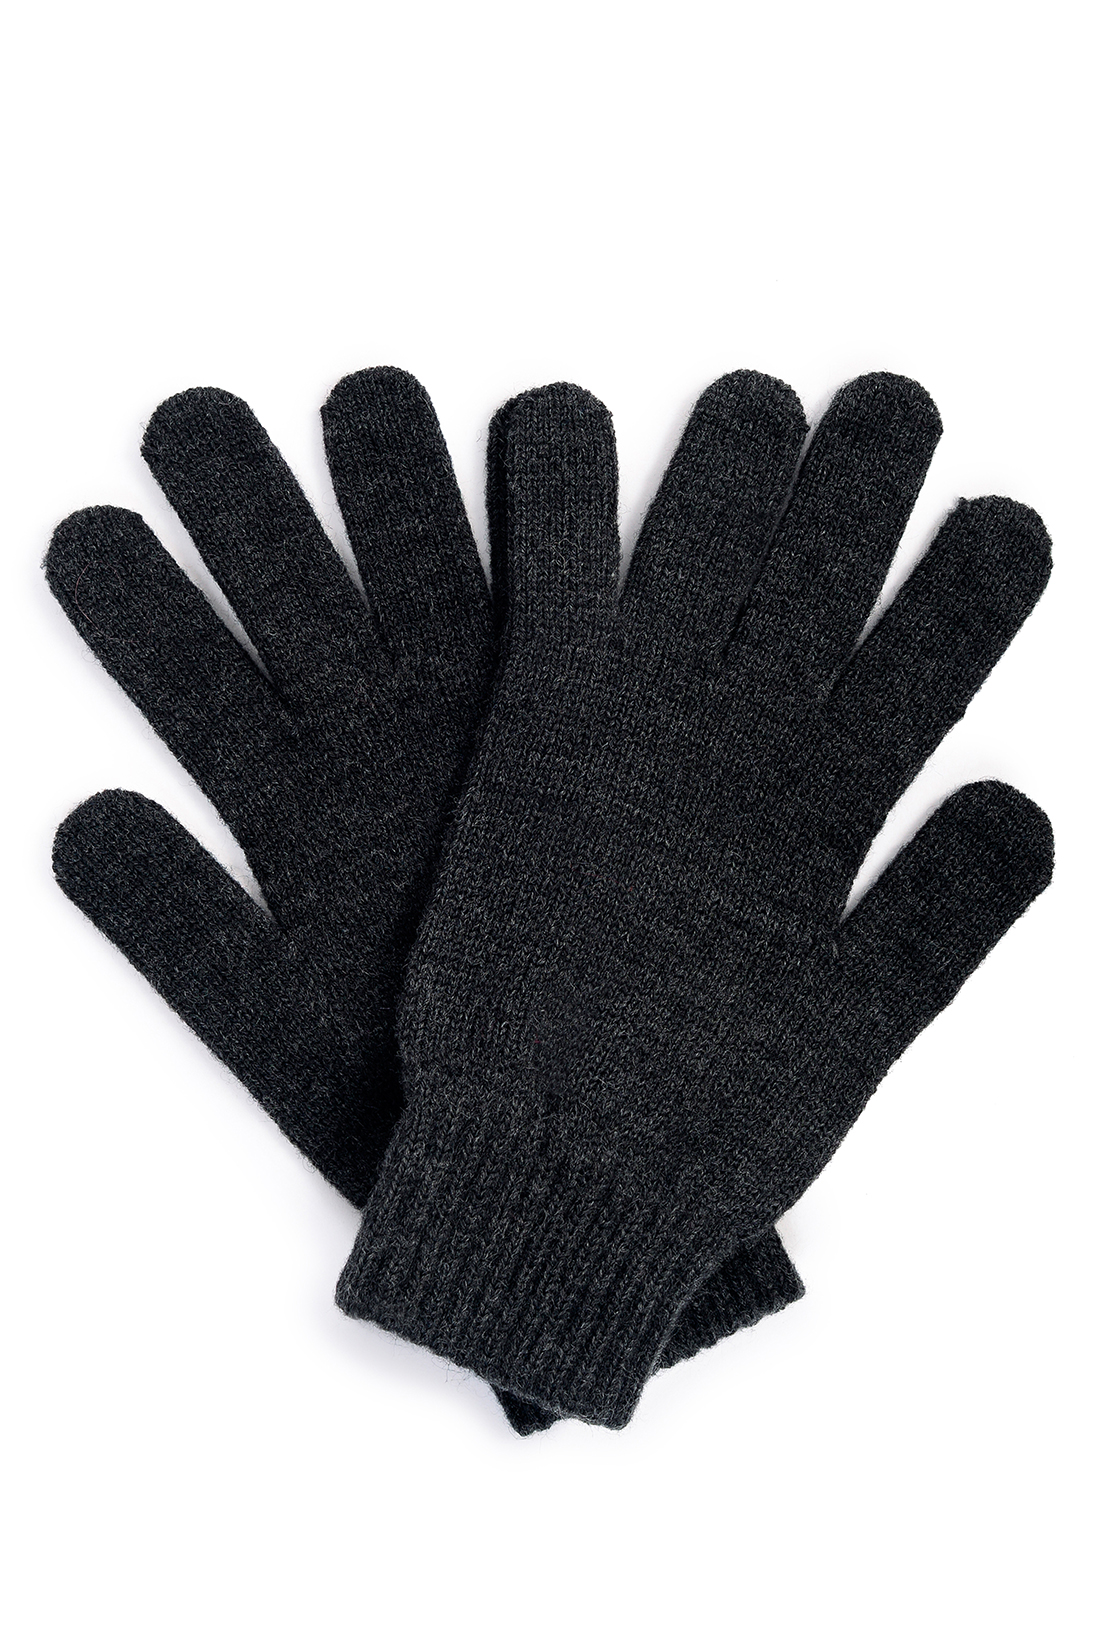 Полушерстяные перчатки (арт. baon B869501), размер Без/раз, цвет marengo melange#серый Полушерстяные перчатки (арт. baon B869501) - фото 1